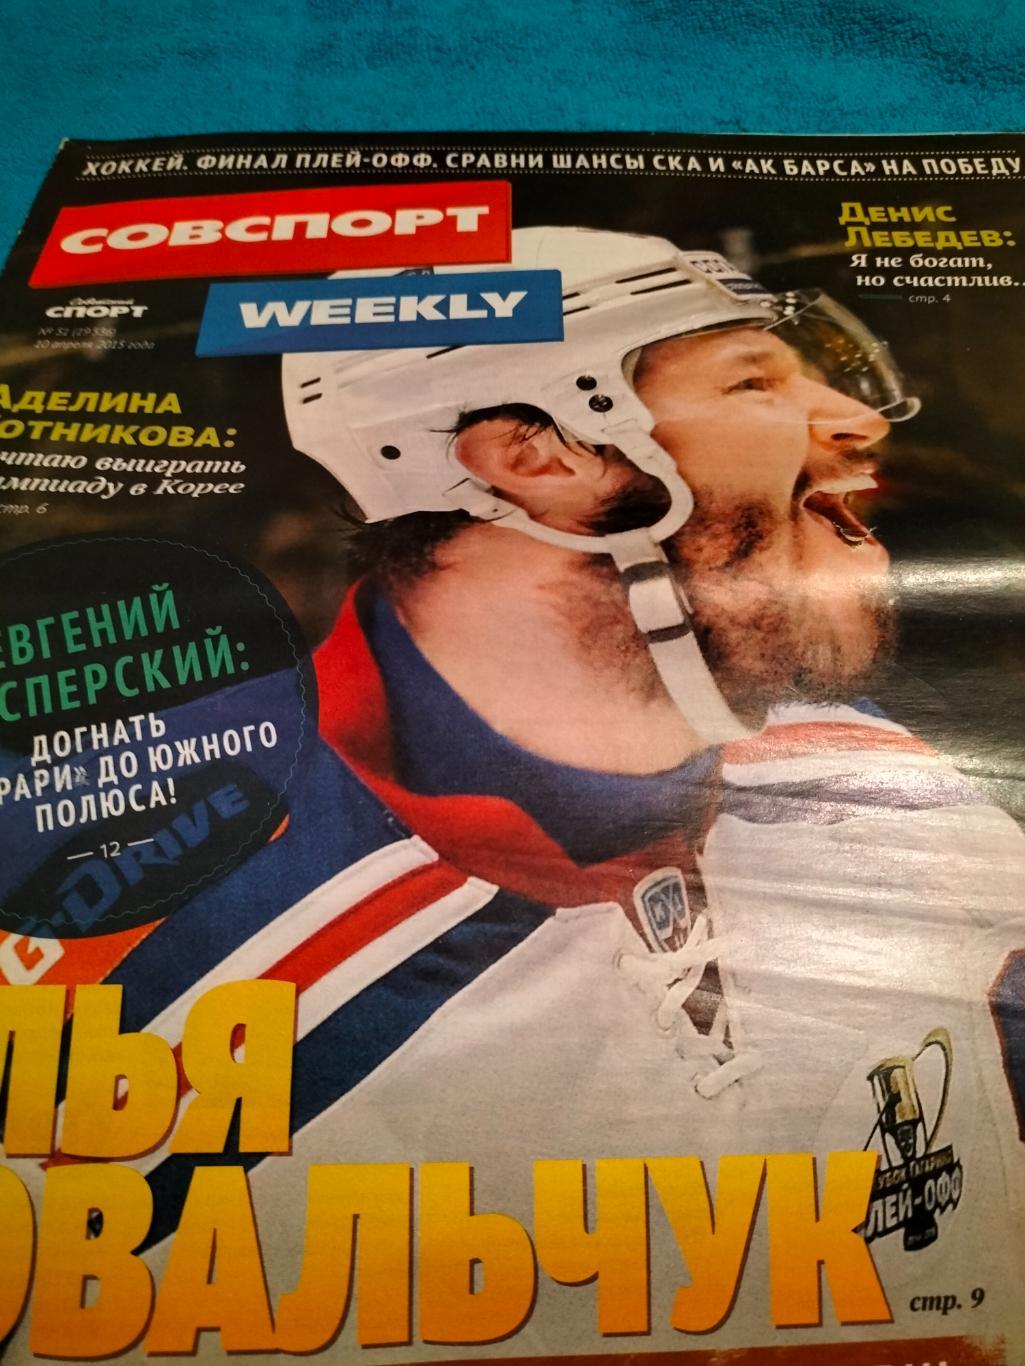 Советский Спорт Weekly №51 2015 года.